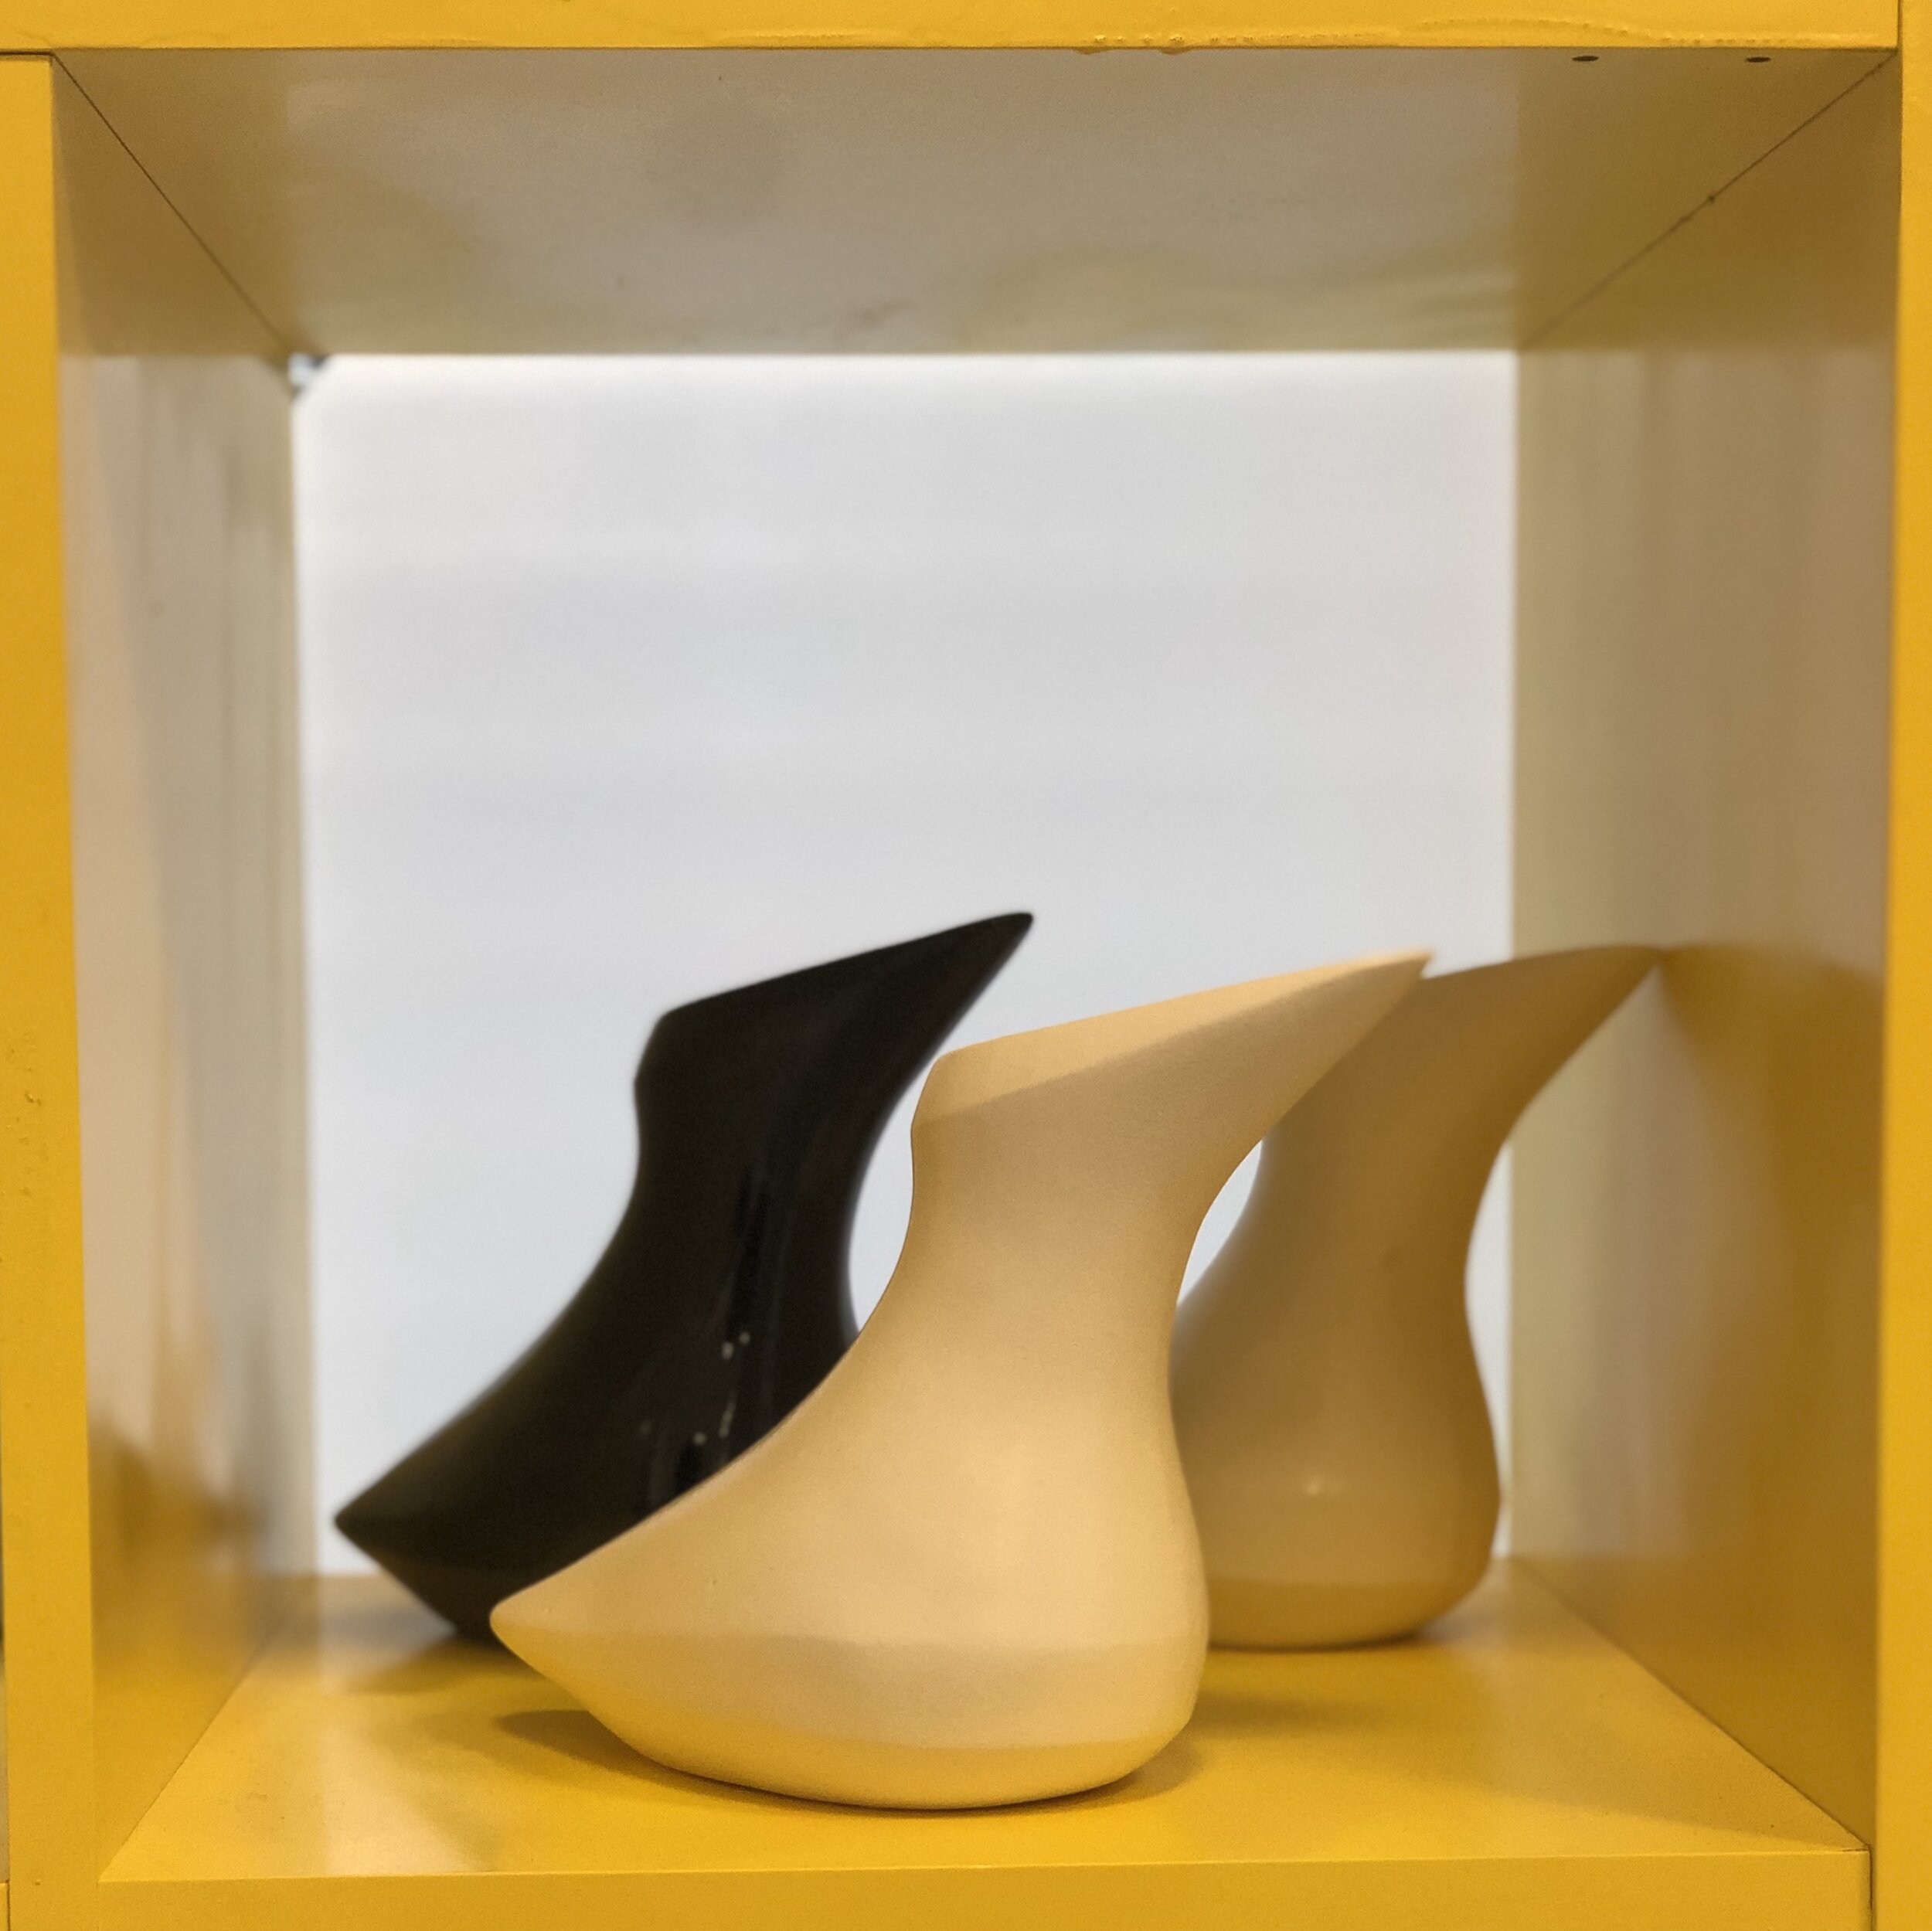   Kickie Chudikova    Ducks in a Row , 2018  Slip cast porcelain ceramic 